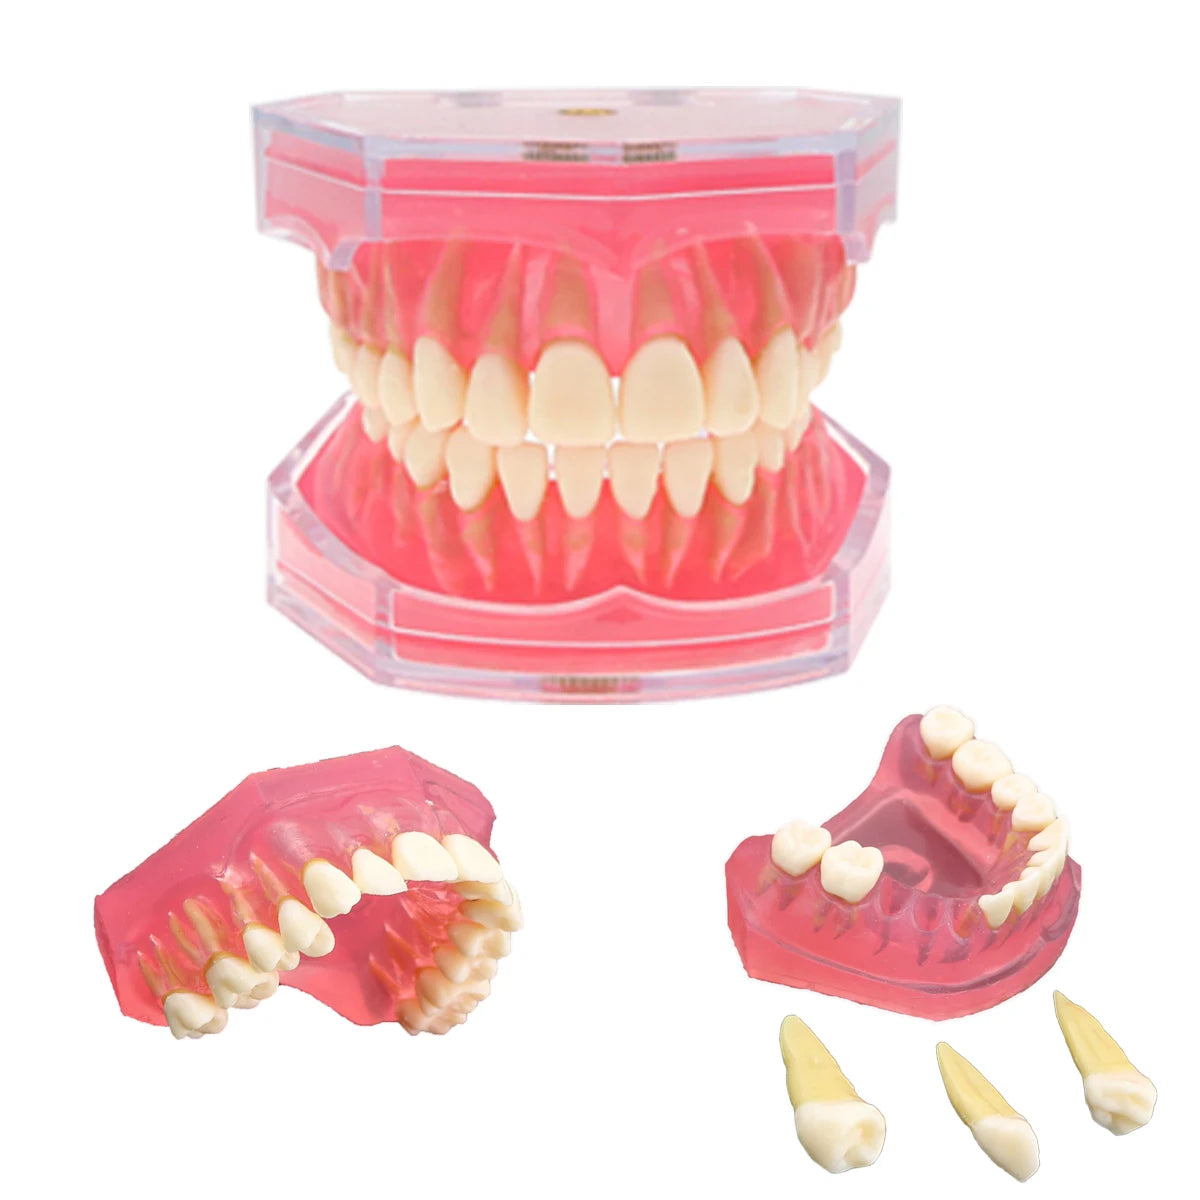 Dental Model 28Pcs Removable Teeth Model Detachable Implant Dentist Teaching Research Fit Standard Soft Rubber Simulation Cheek